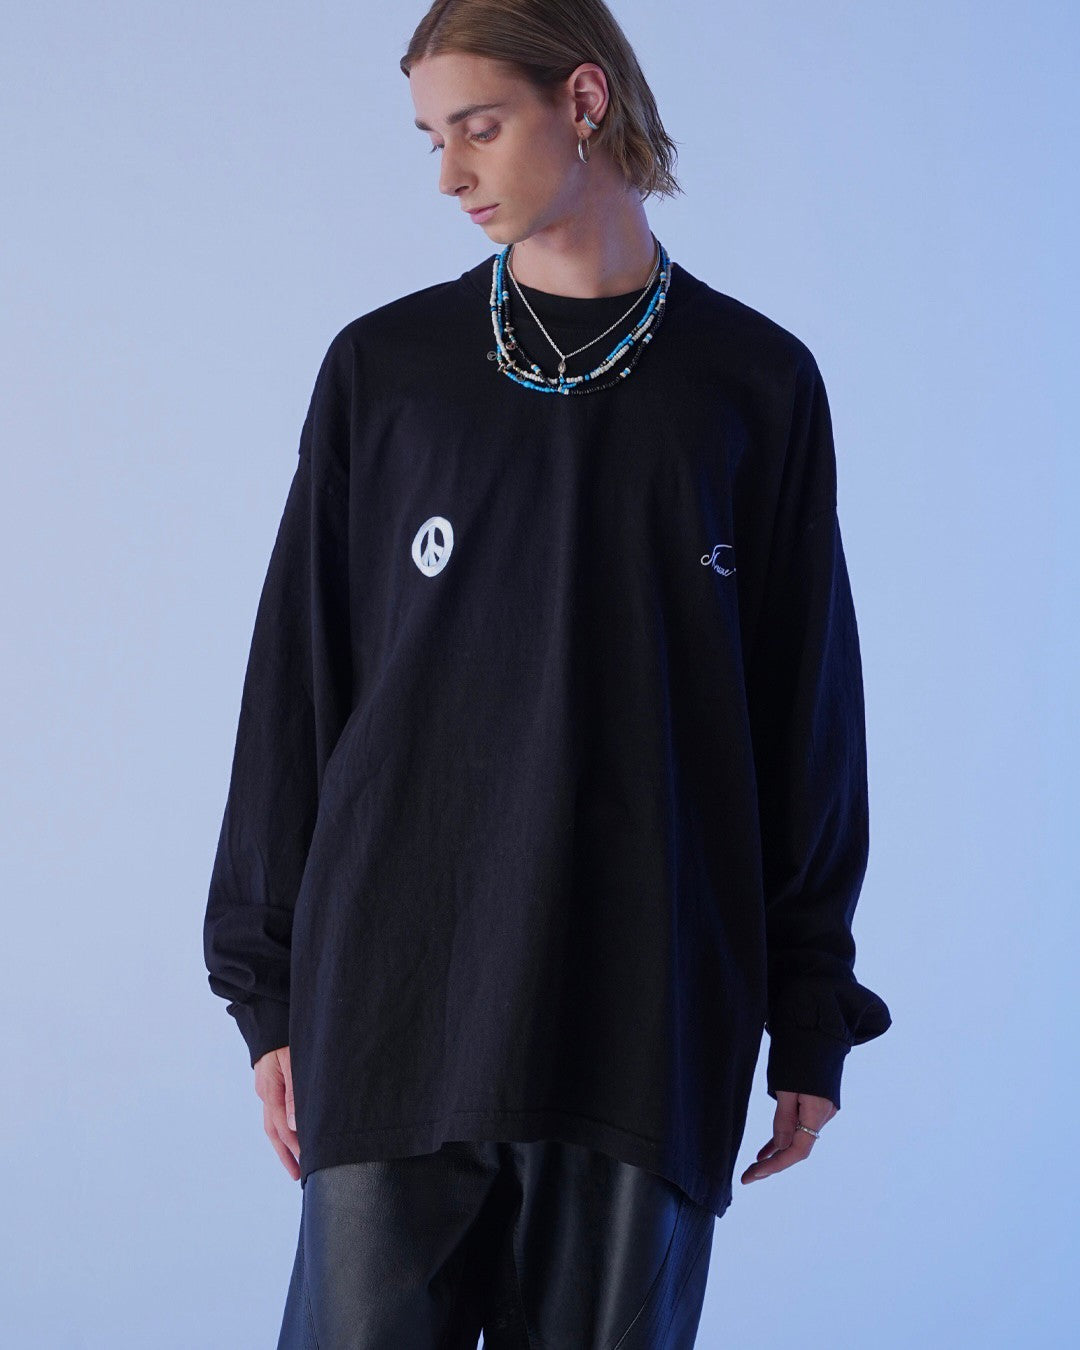 MUZE BLACK LABEL - MUZE PEACE EMBROIDERY LONG T-SHIRT(BLACK)ミューズ ピース 刺繍  ロングTシャツ ブラック